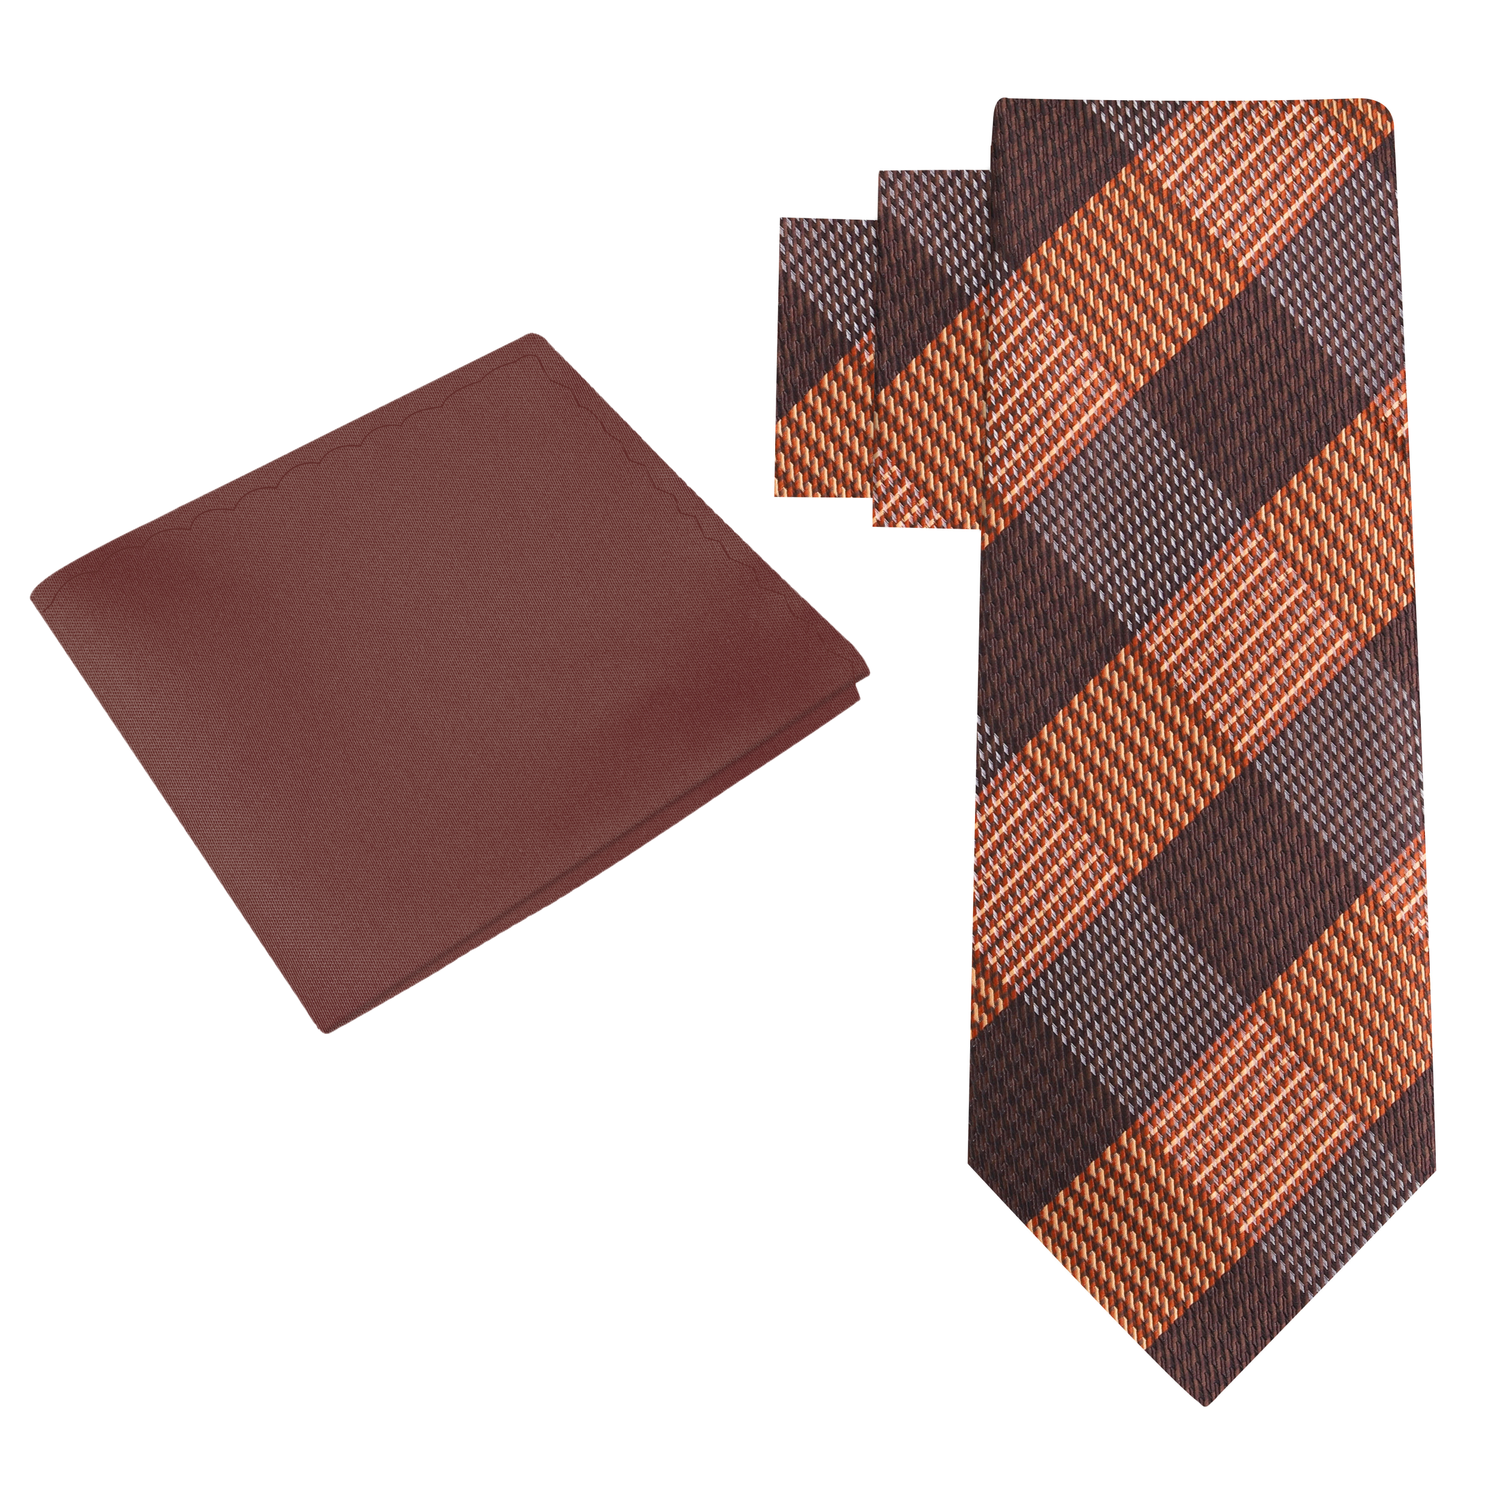 Alt View: Brown Plaid Necktie and Brown Square